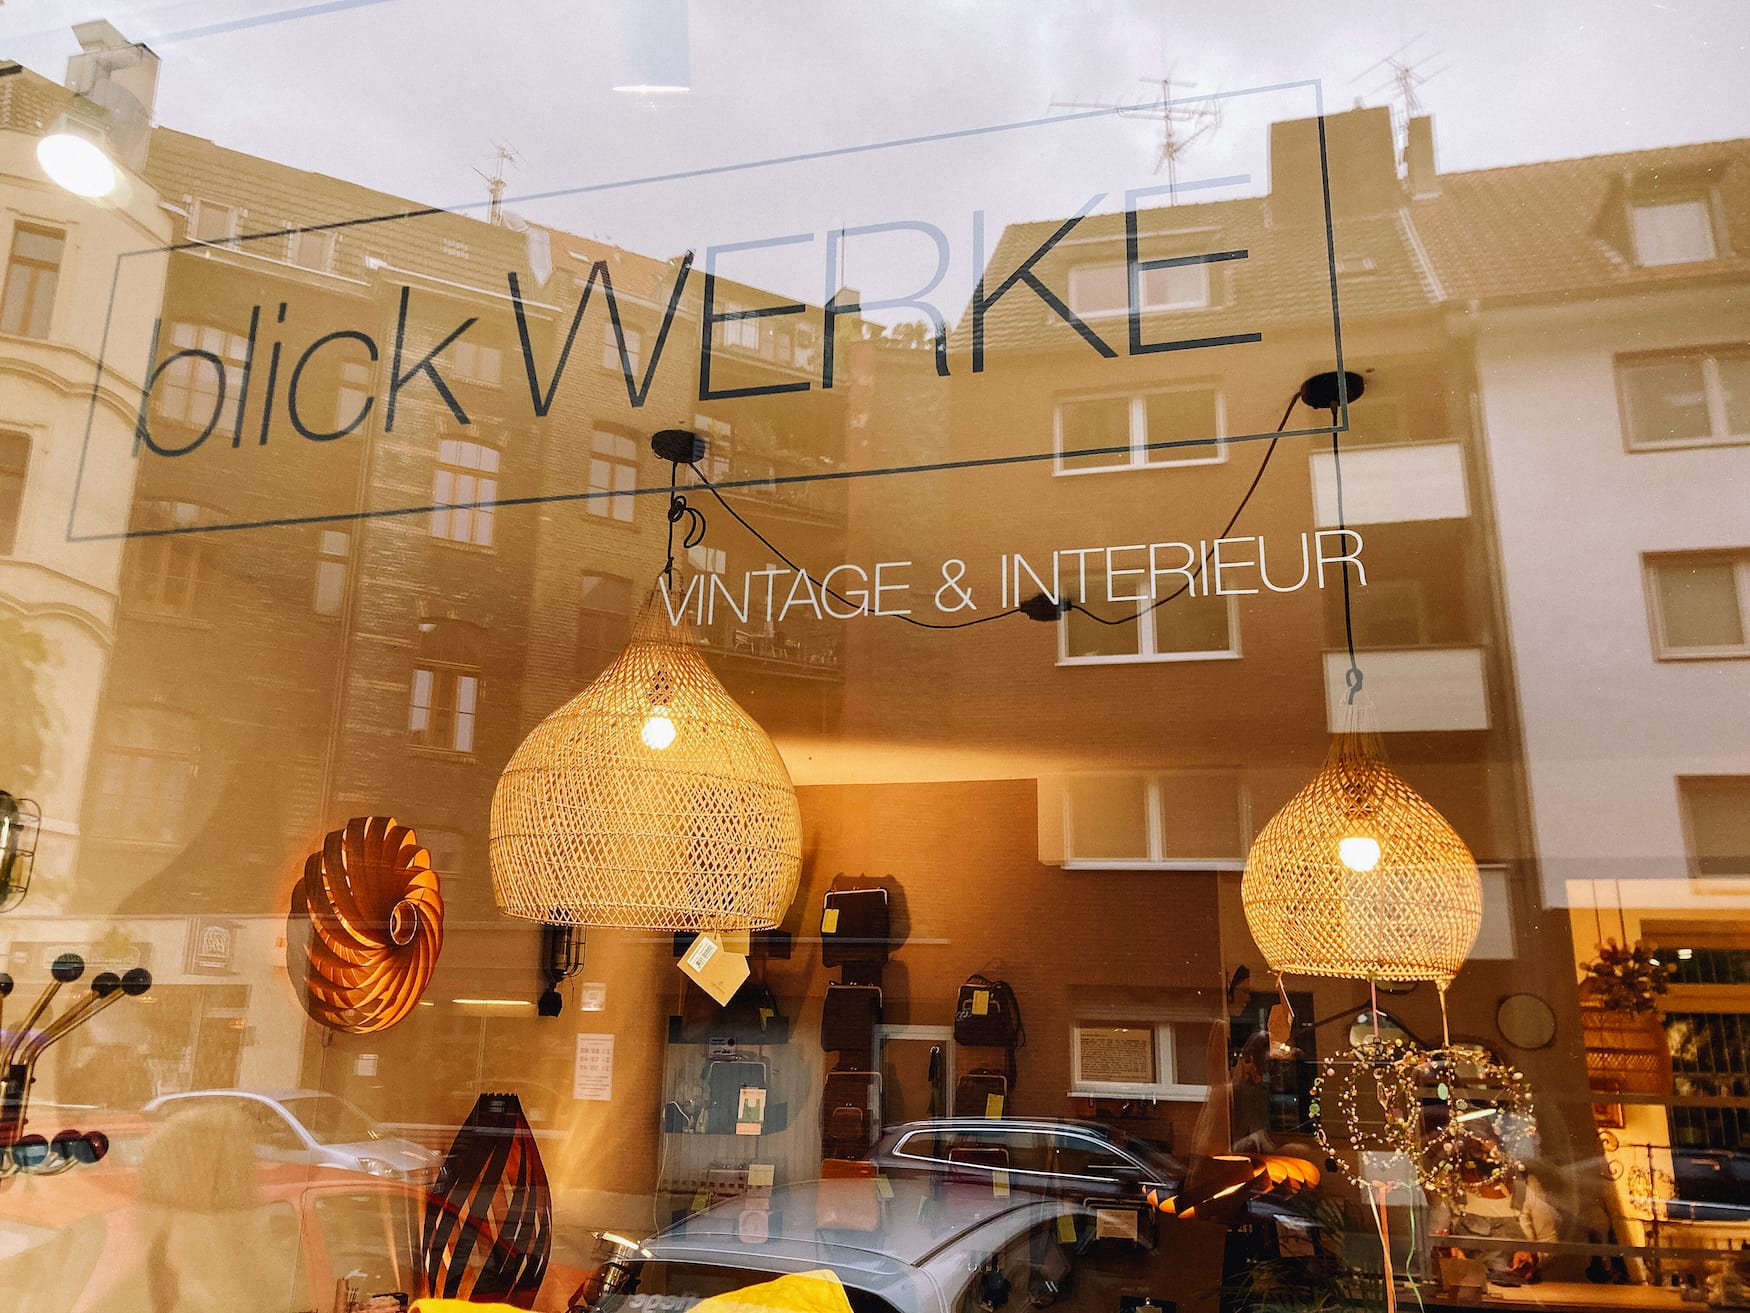 Store window of the store "Blickwerke" in Cologne